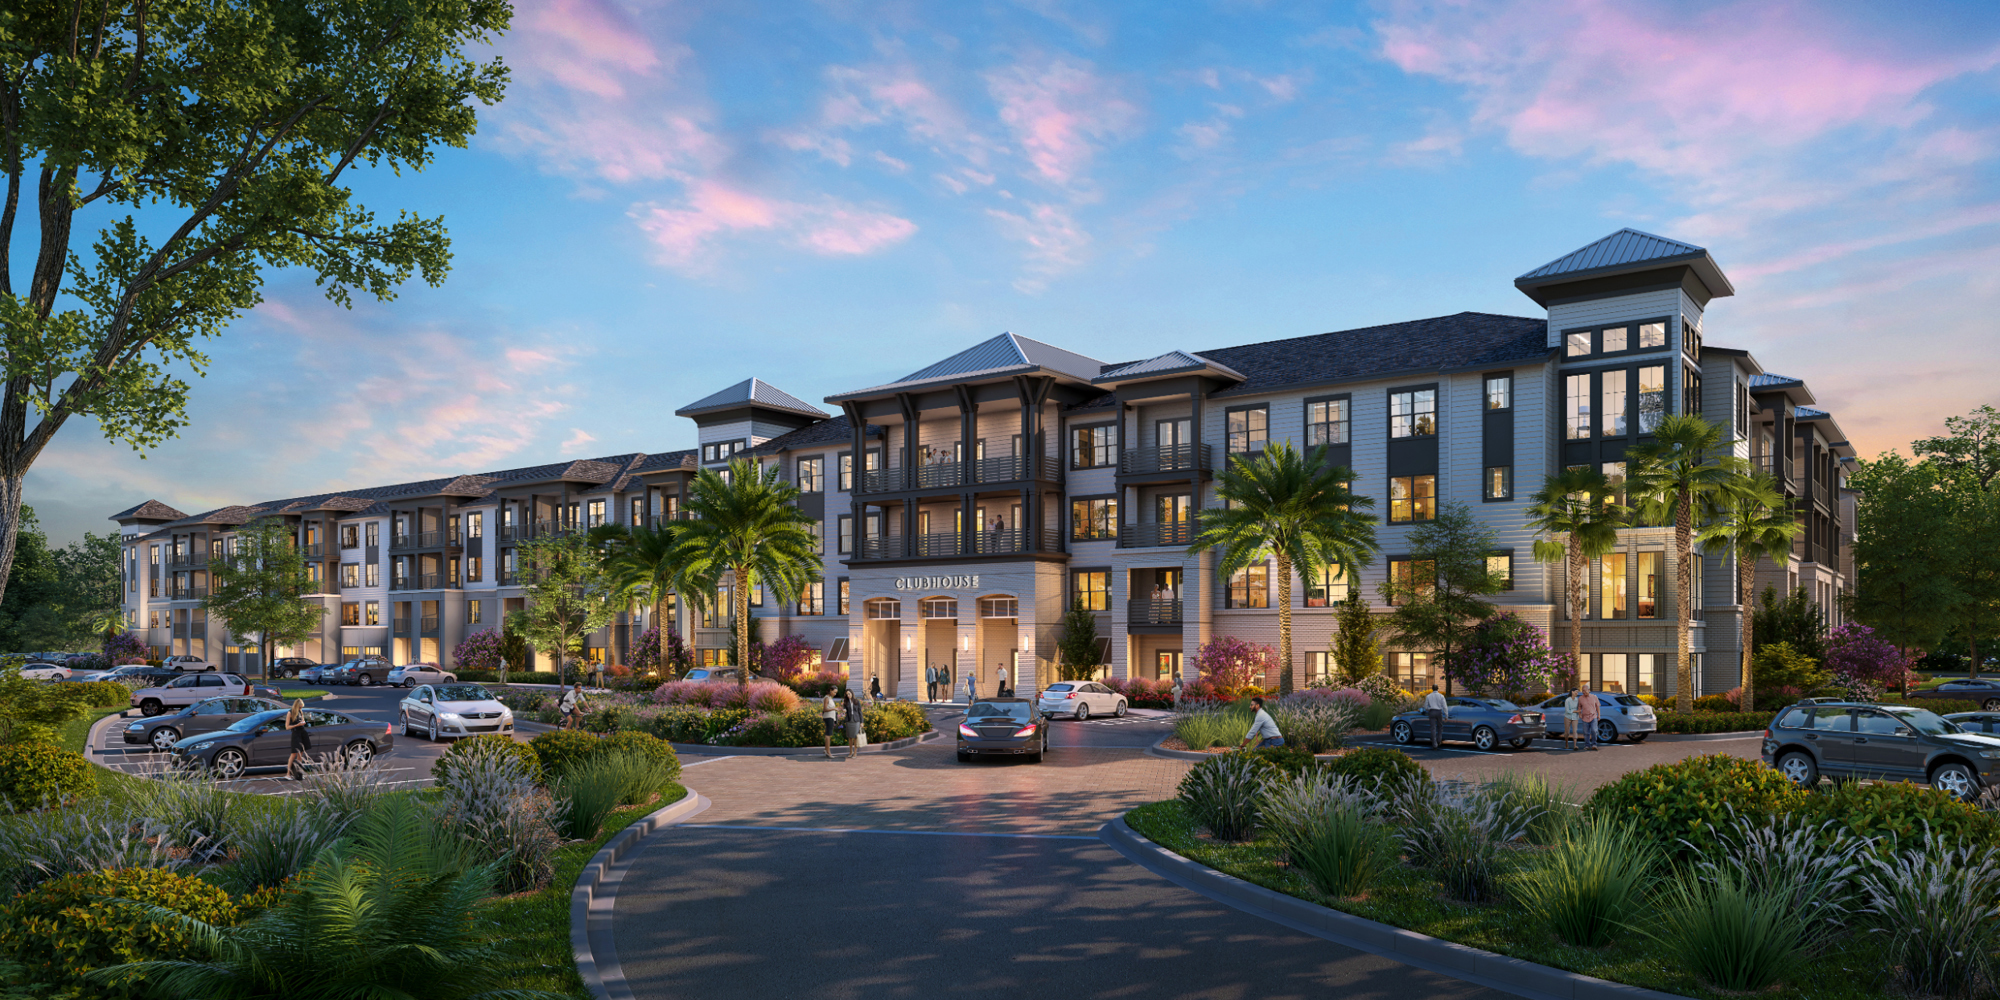 RISE: A Real Estate Company is developing The Julington apartments along San Jose Boulevard in Mandarin.